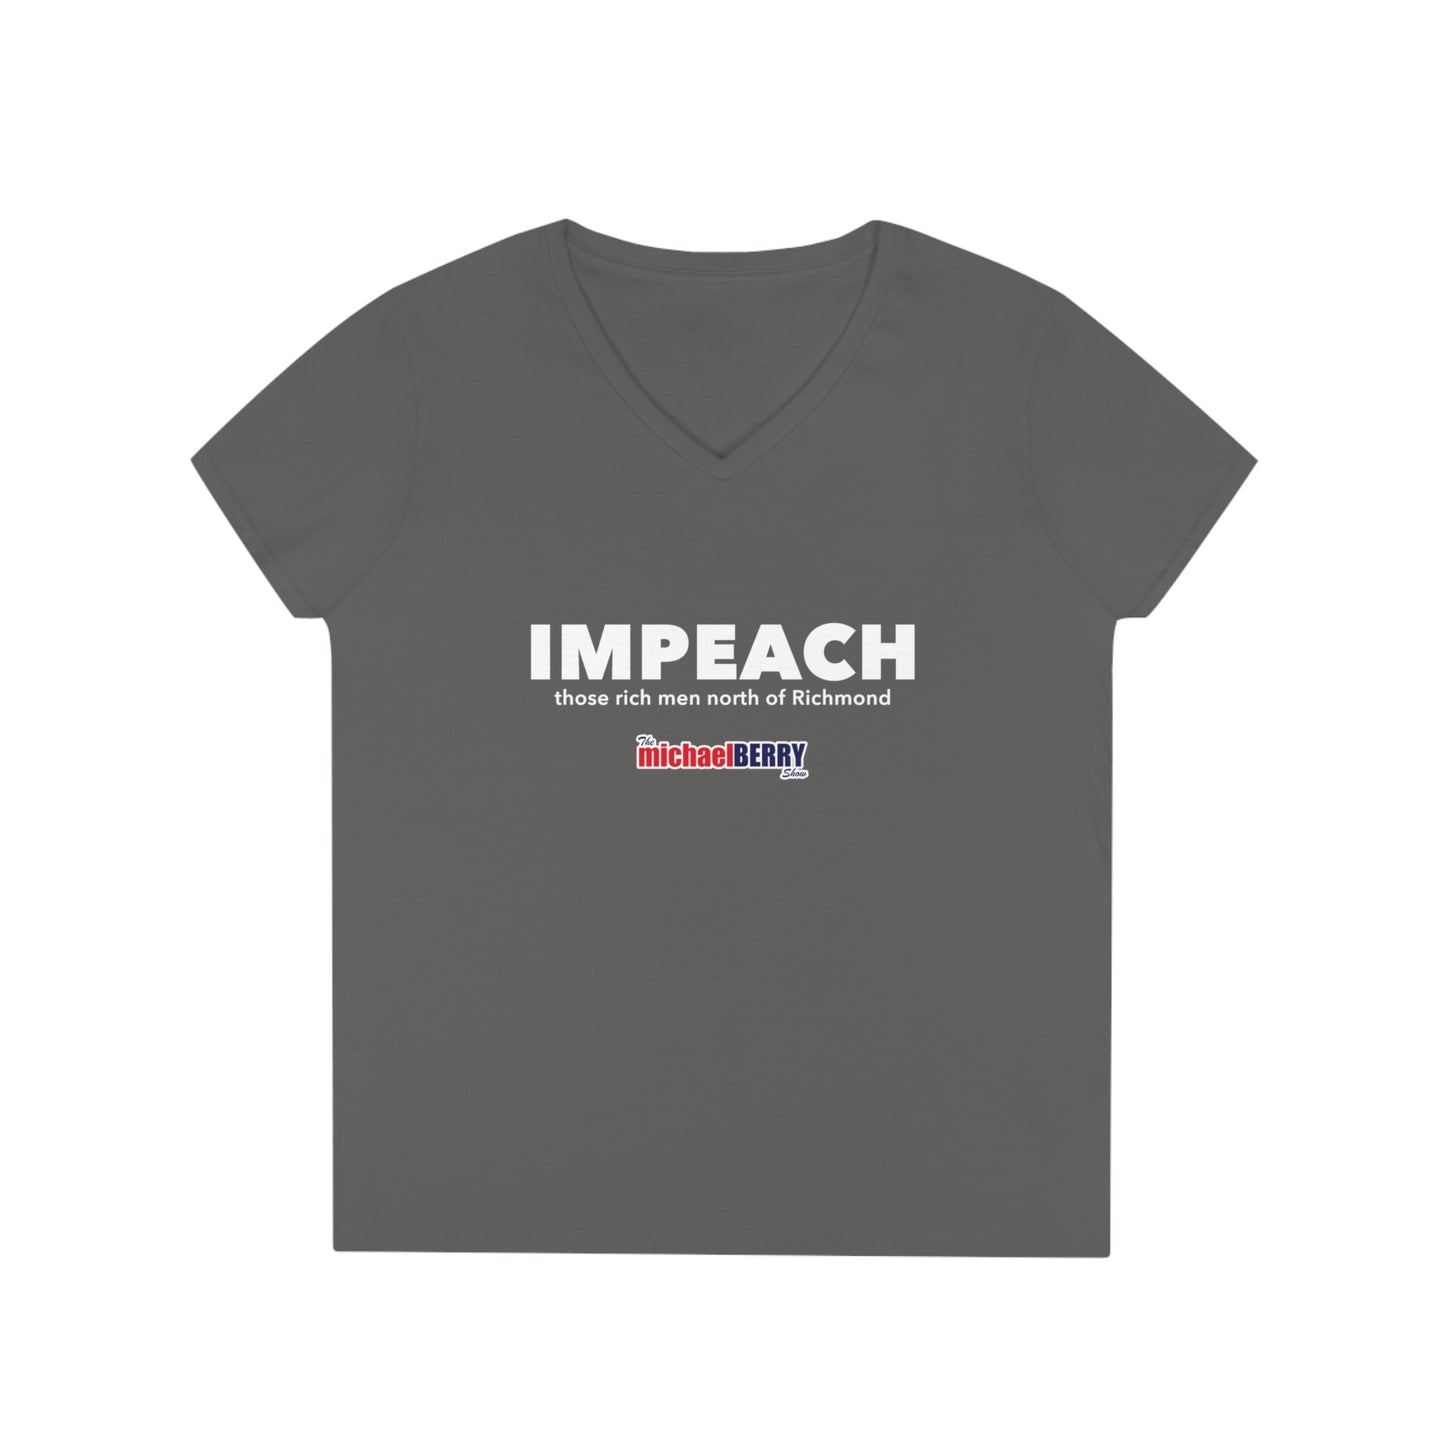 Impeach those rich men north of Richland - Ladies' V-Neck Sexy T-Shirt